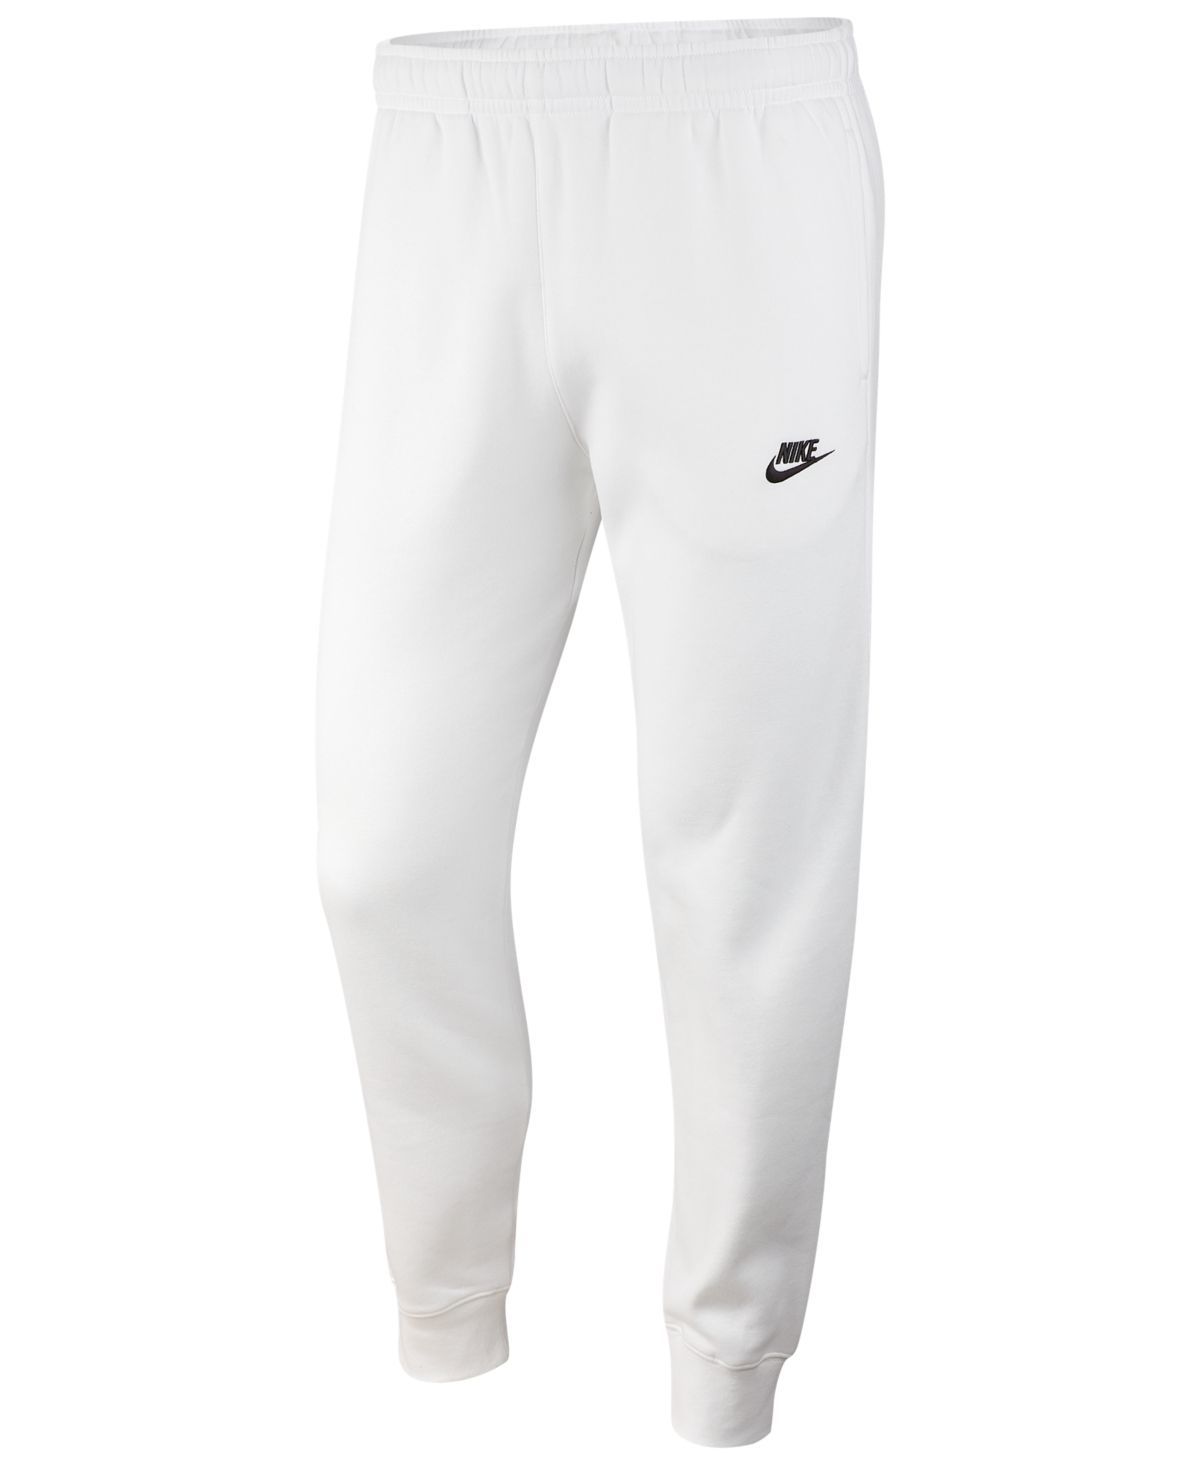 Nike Men's Club Fleece Joggers & Reviews - All Activewear - Men - Macy's - Nike Men's Club Fleece Joggers & Reviews - All Activewear - Men - Macy's -   17 nike style Mens ideas